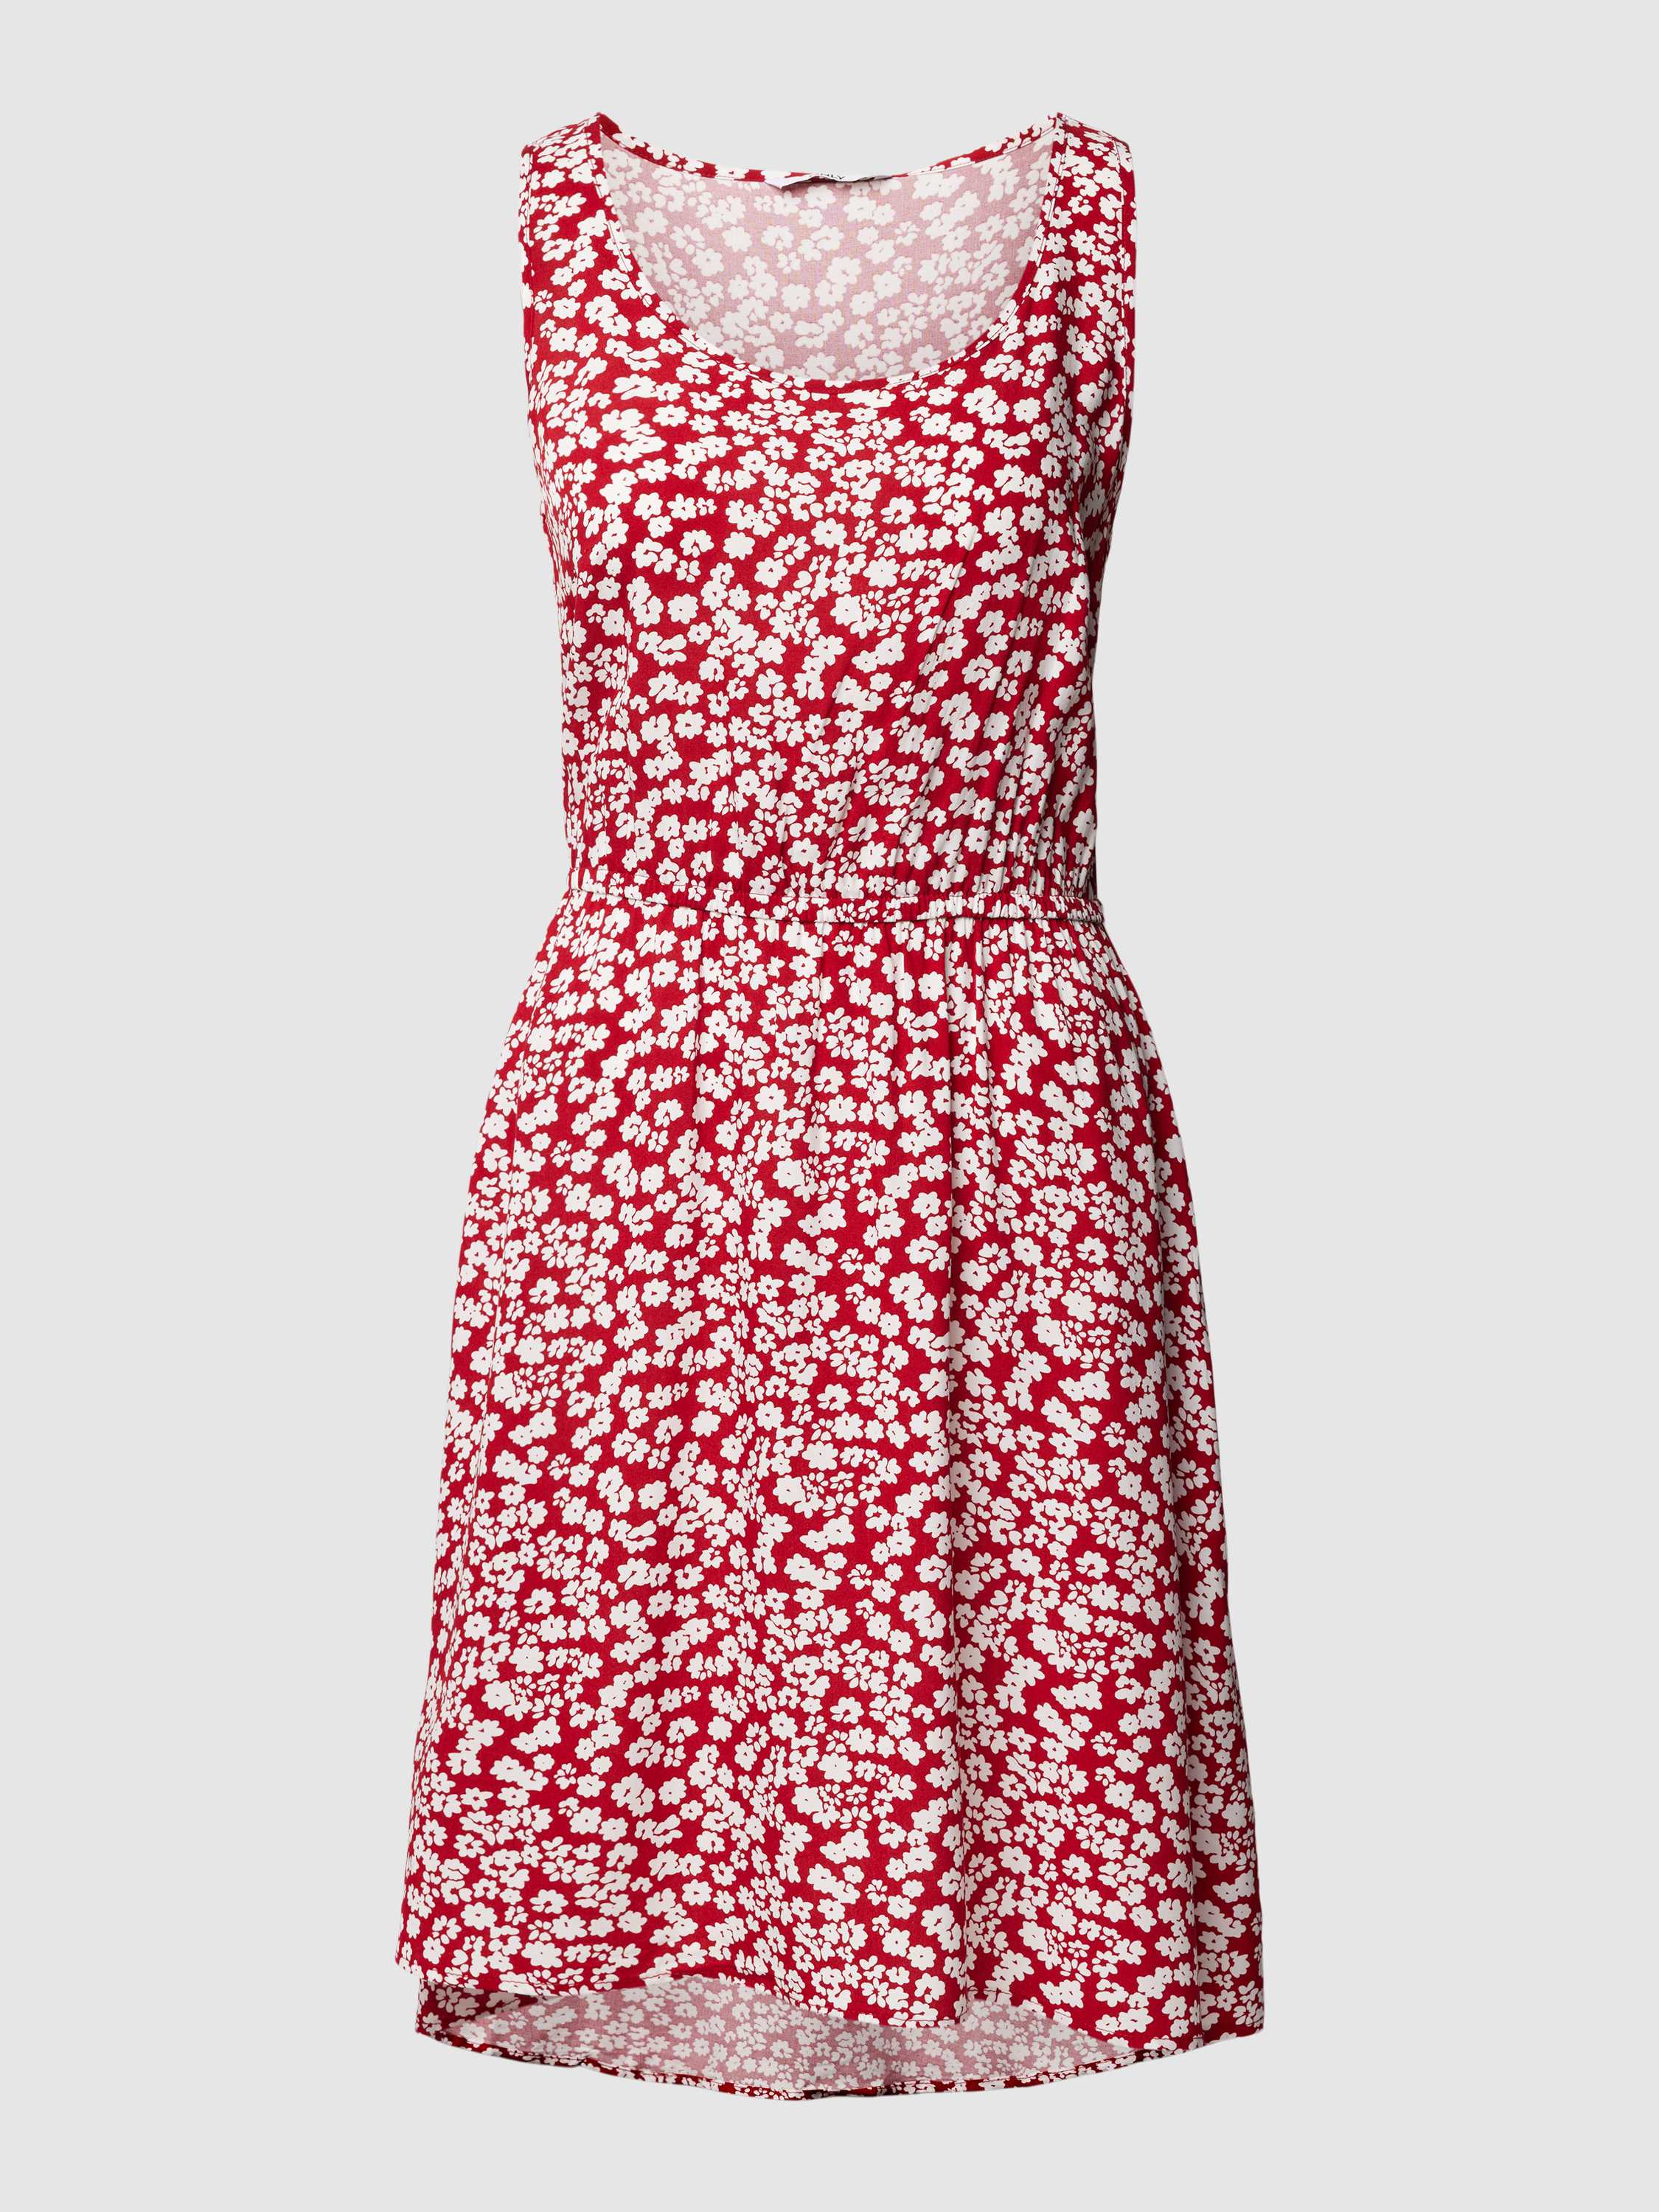 Knielanges Kleid mit floralem Muster Modell 'NOVA', Peek & Cloppenburg